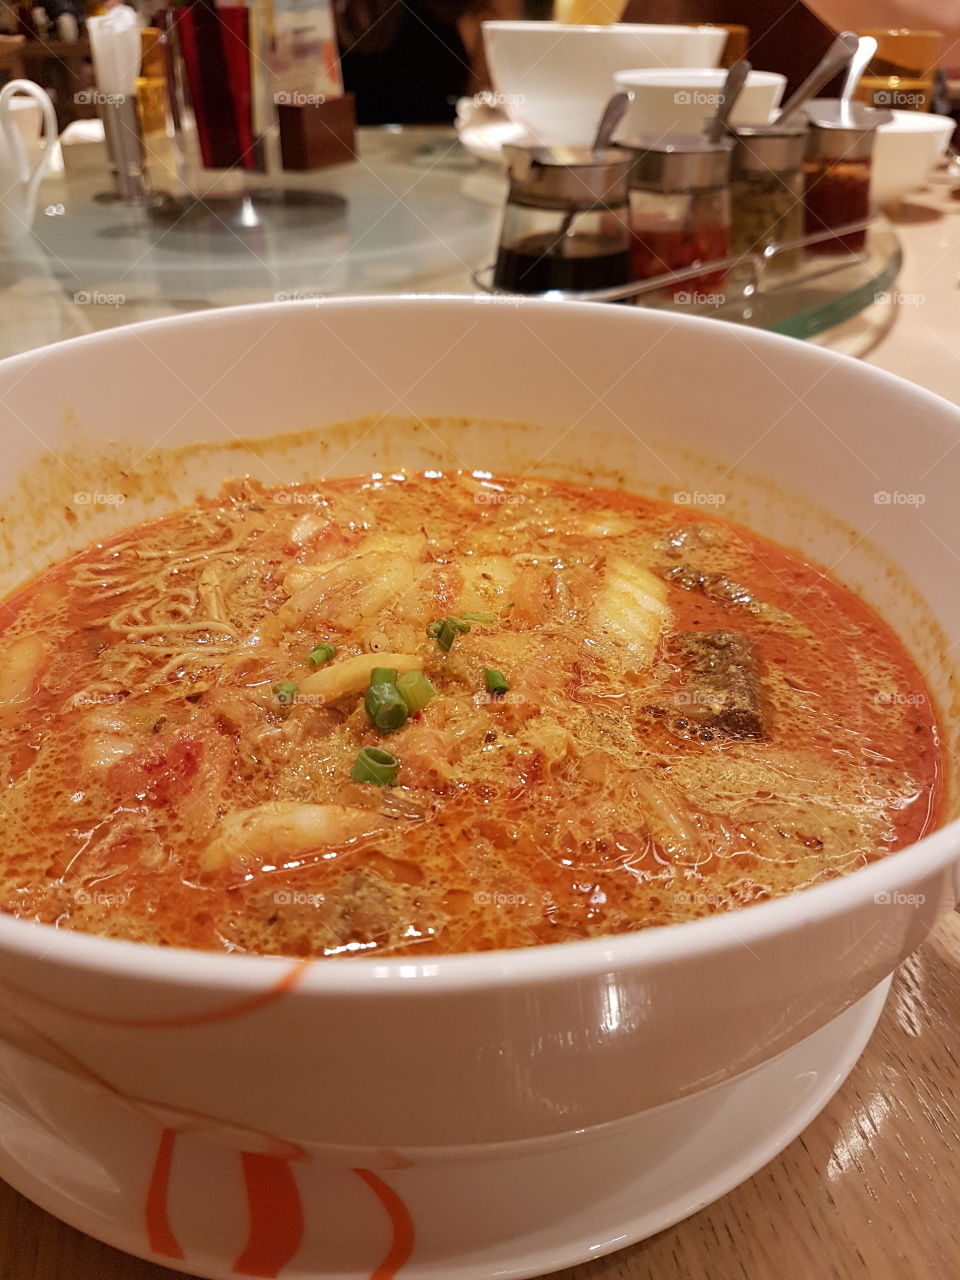 My noodle soup creation: egg noodles + curry laksa + beef brisket + shrimp + kimchee 🍲